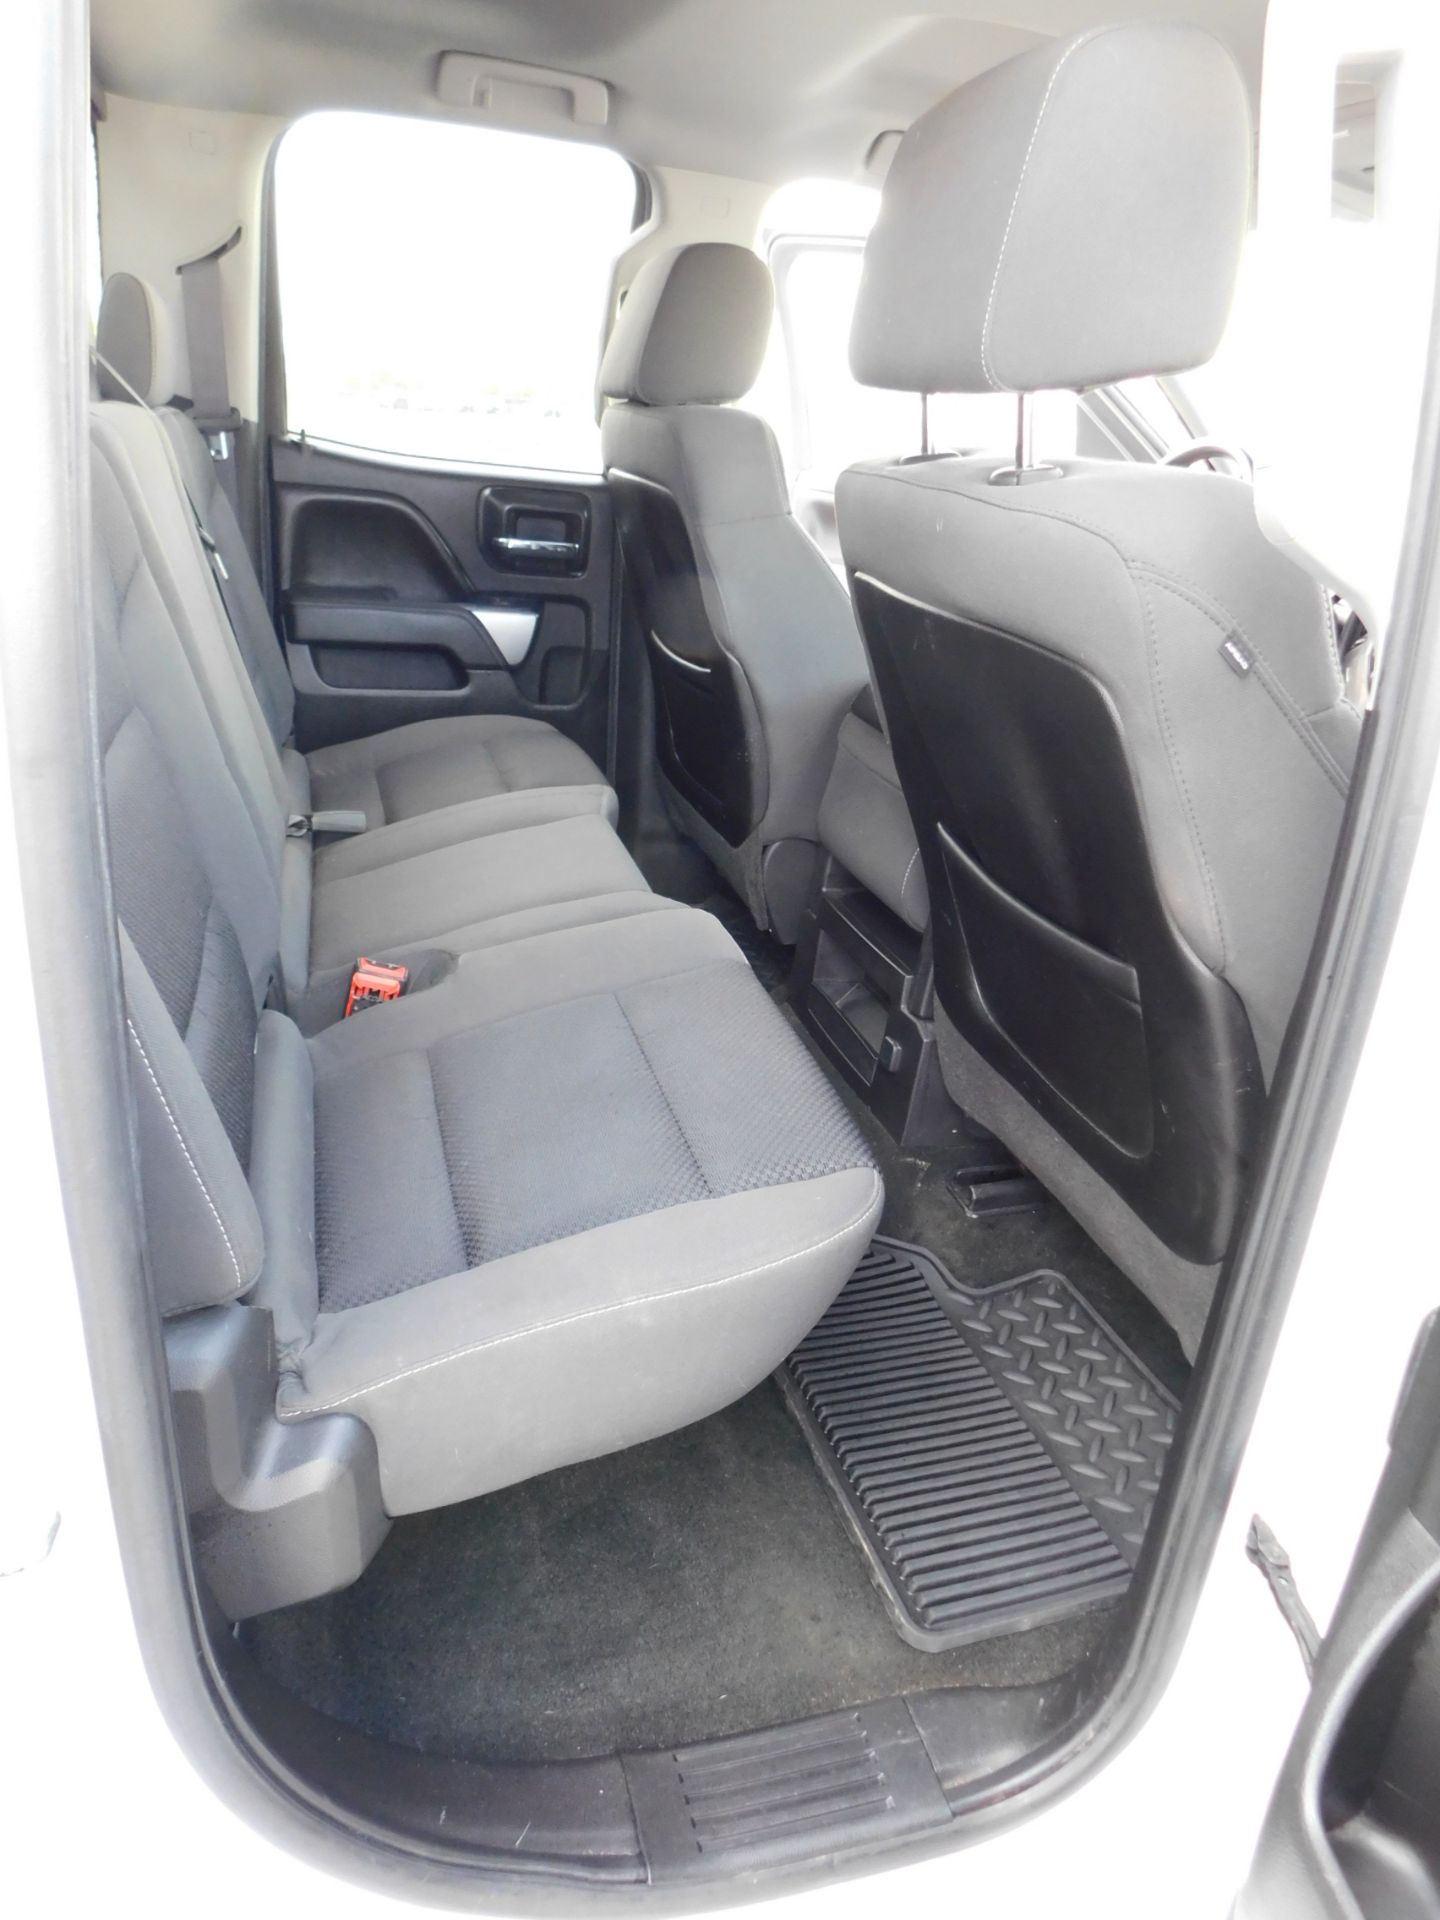 2014 Chevrolet Silverado LT Pickup, VIN 1GCVKREC3EZ139405, 4-Door 4 WD, Automatic, AM/FM, AC, Cruise - Image 37 of 51